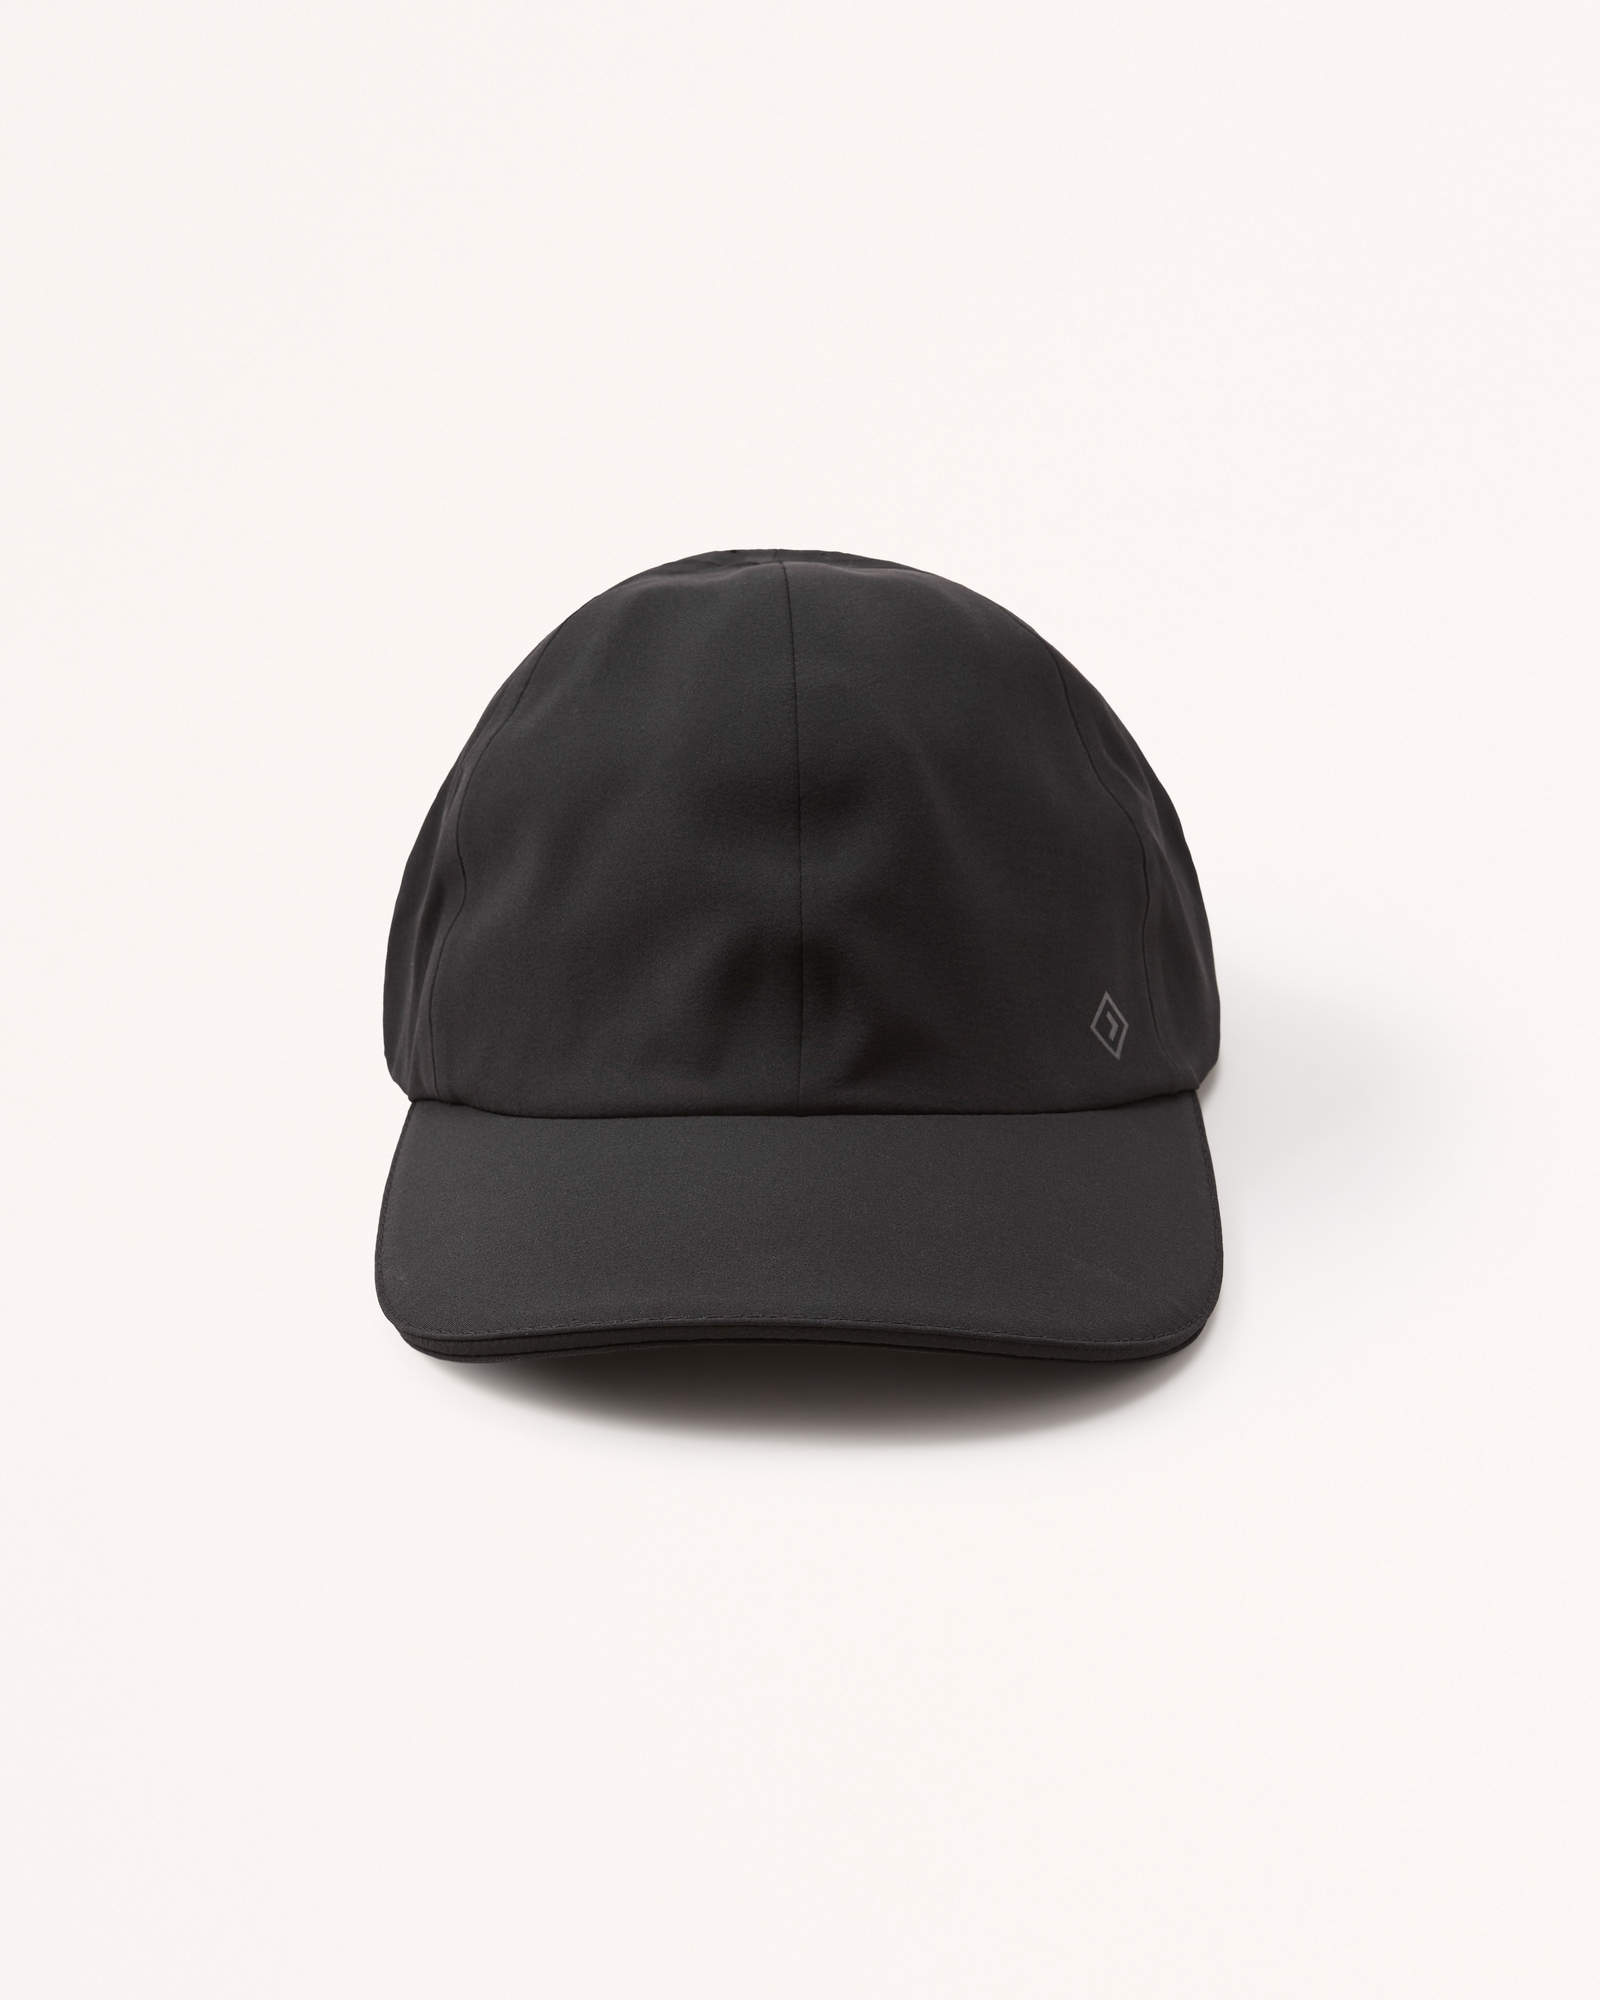 Free Bird 99 Unisex Cotton Adjustable Baseball Cap Plain Hat(black), 7 1/8-7 1/2